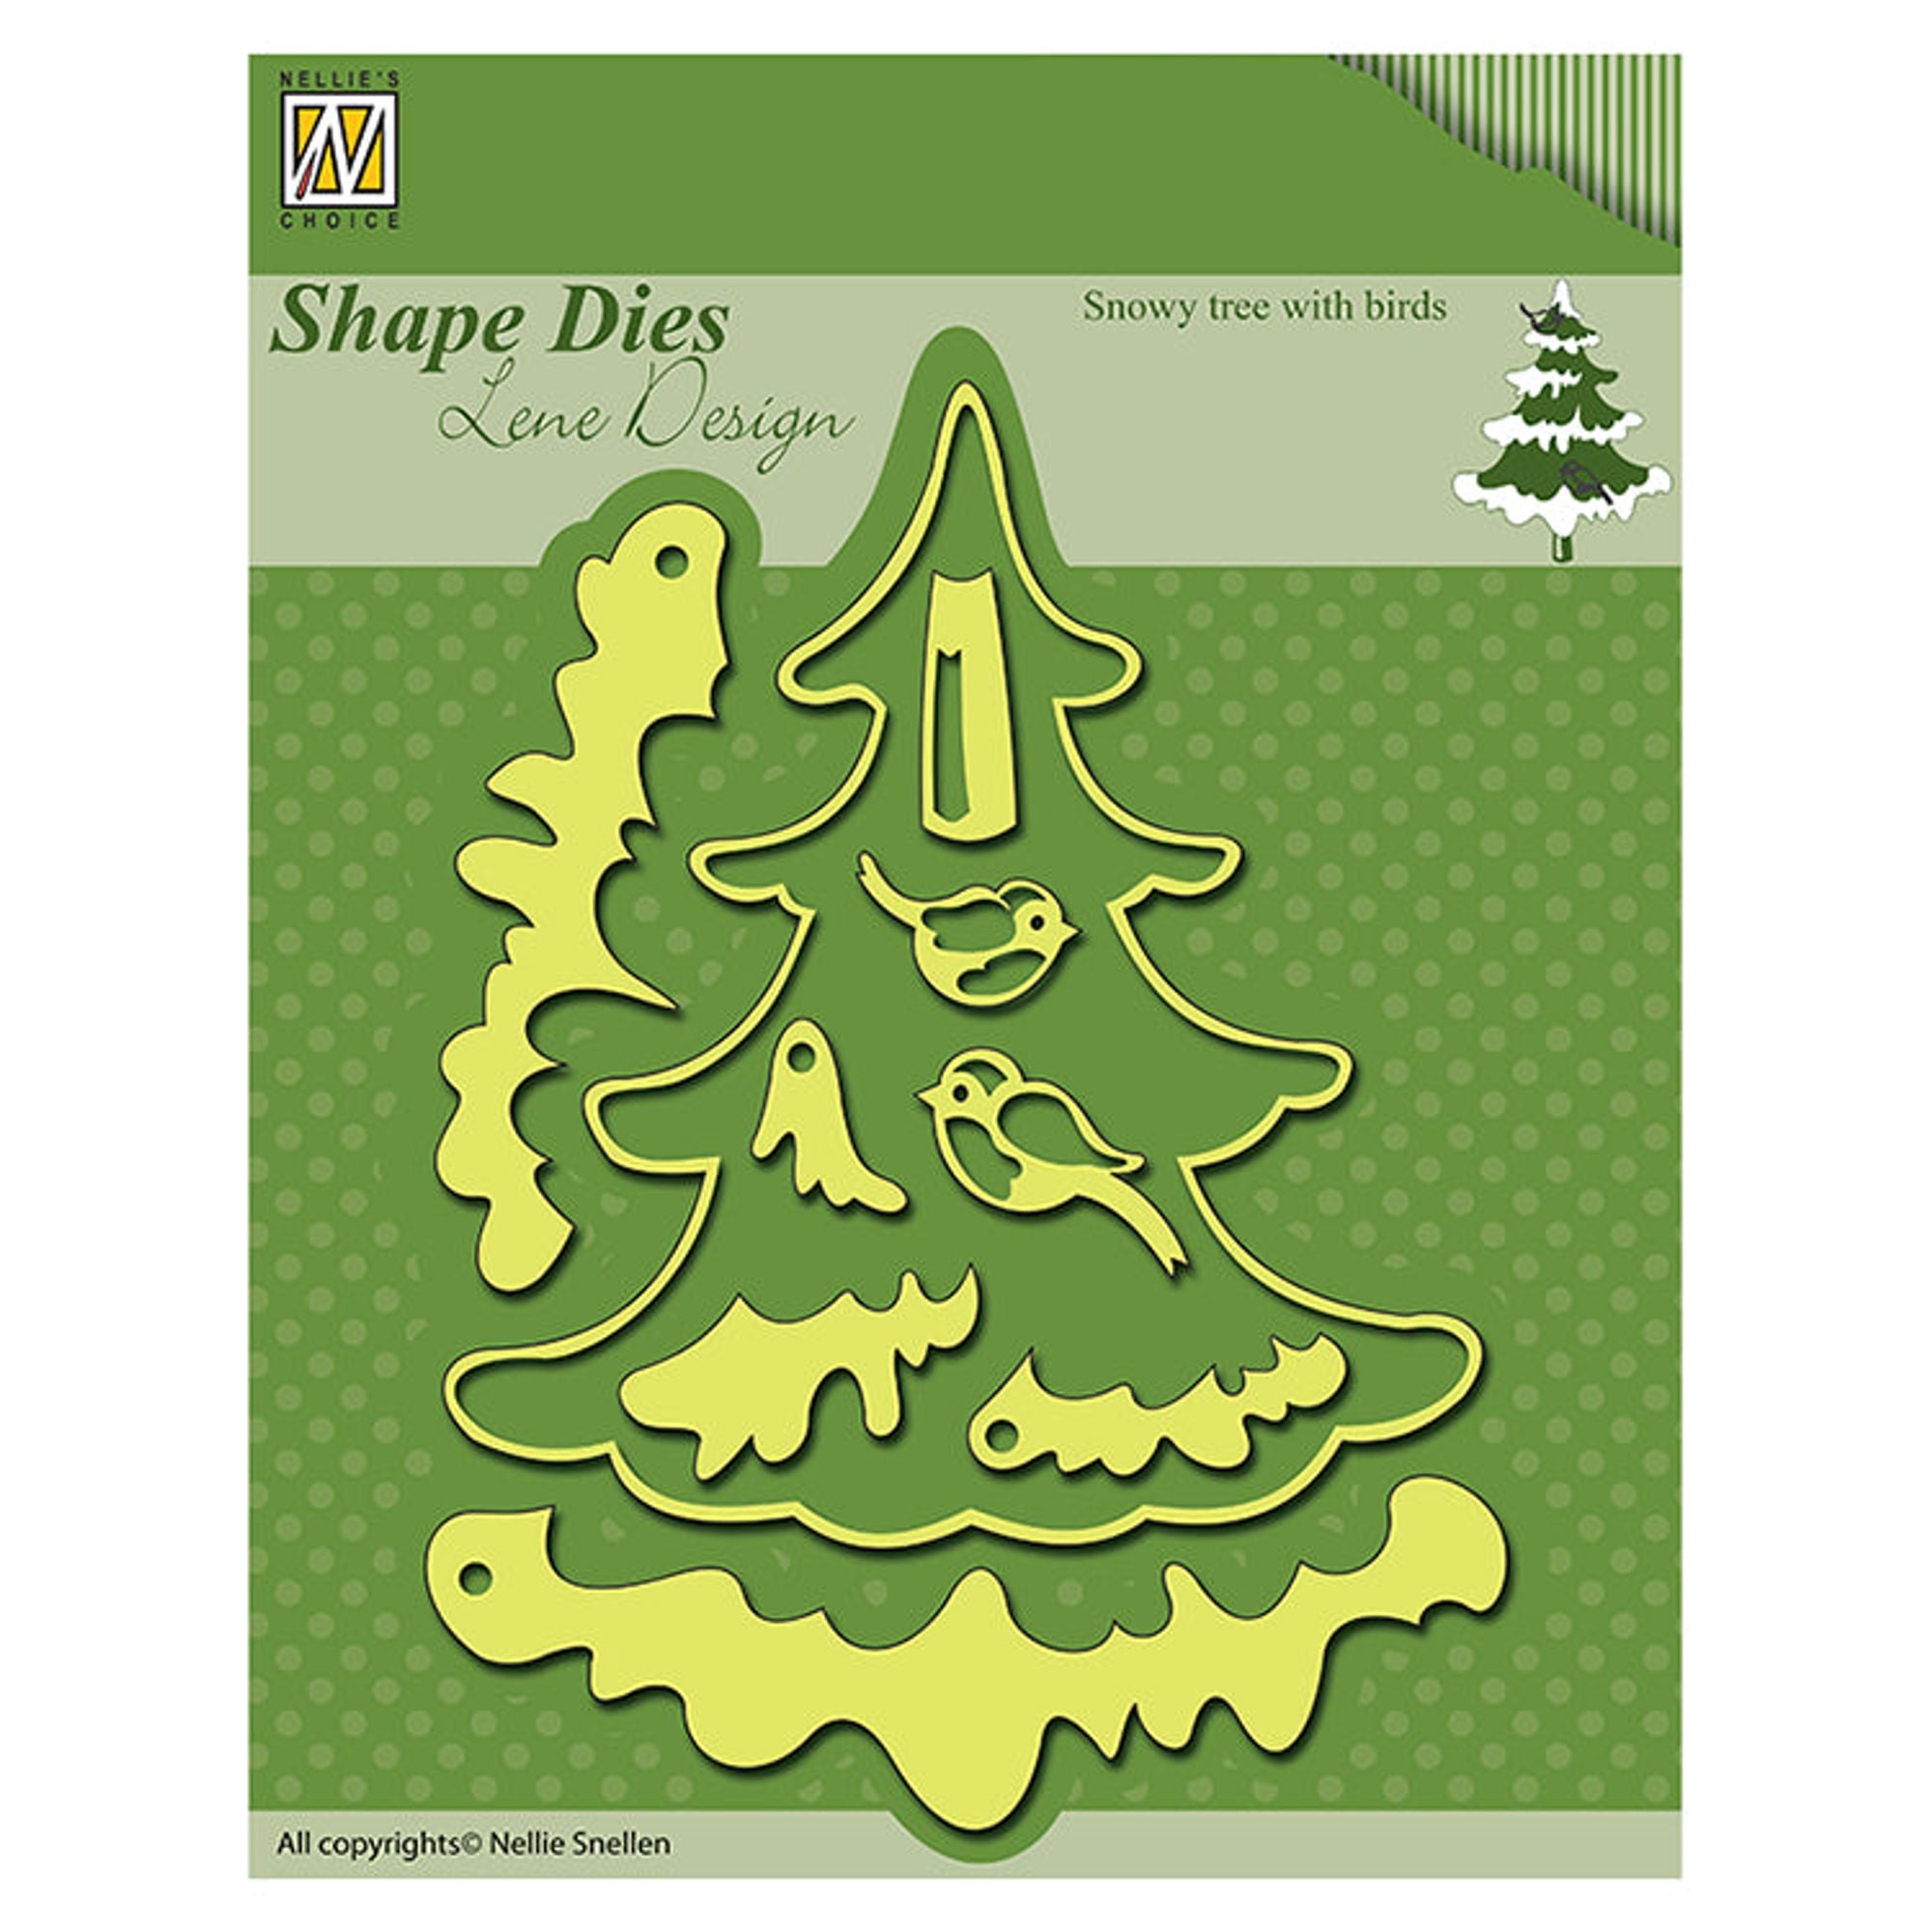 Shape Die Lene Design - Snowy Tree with Birds